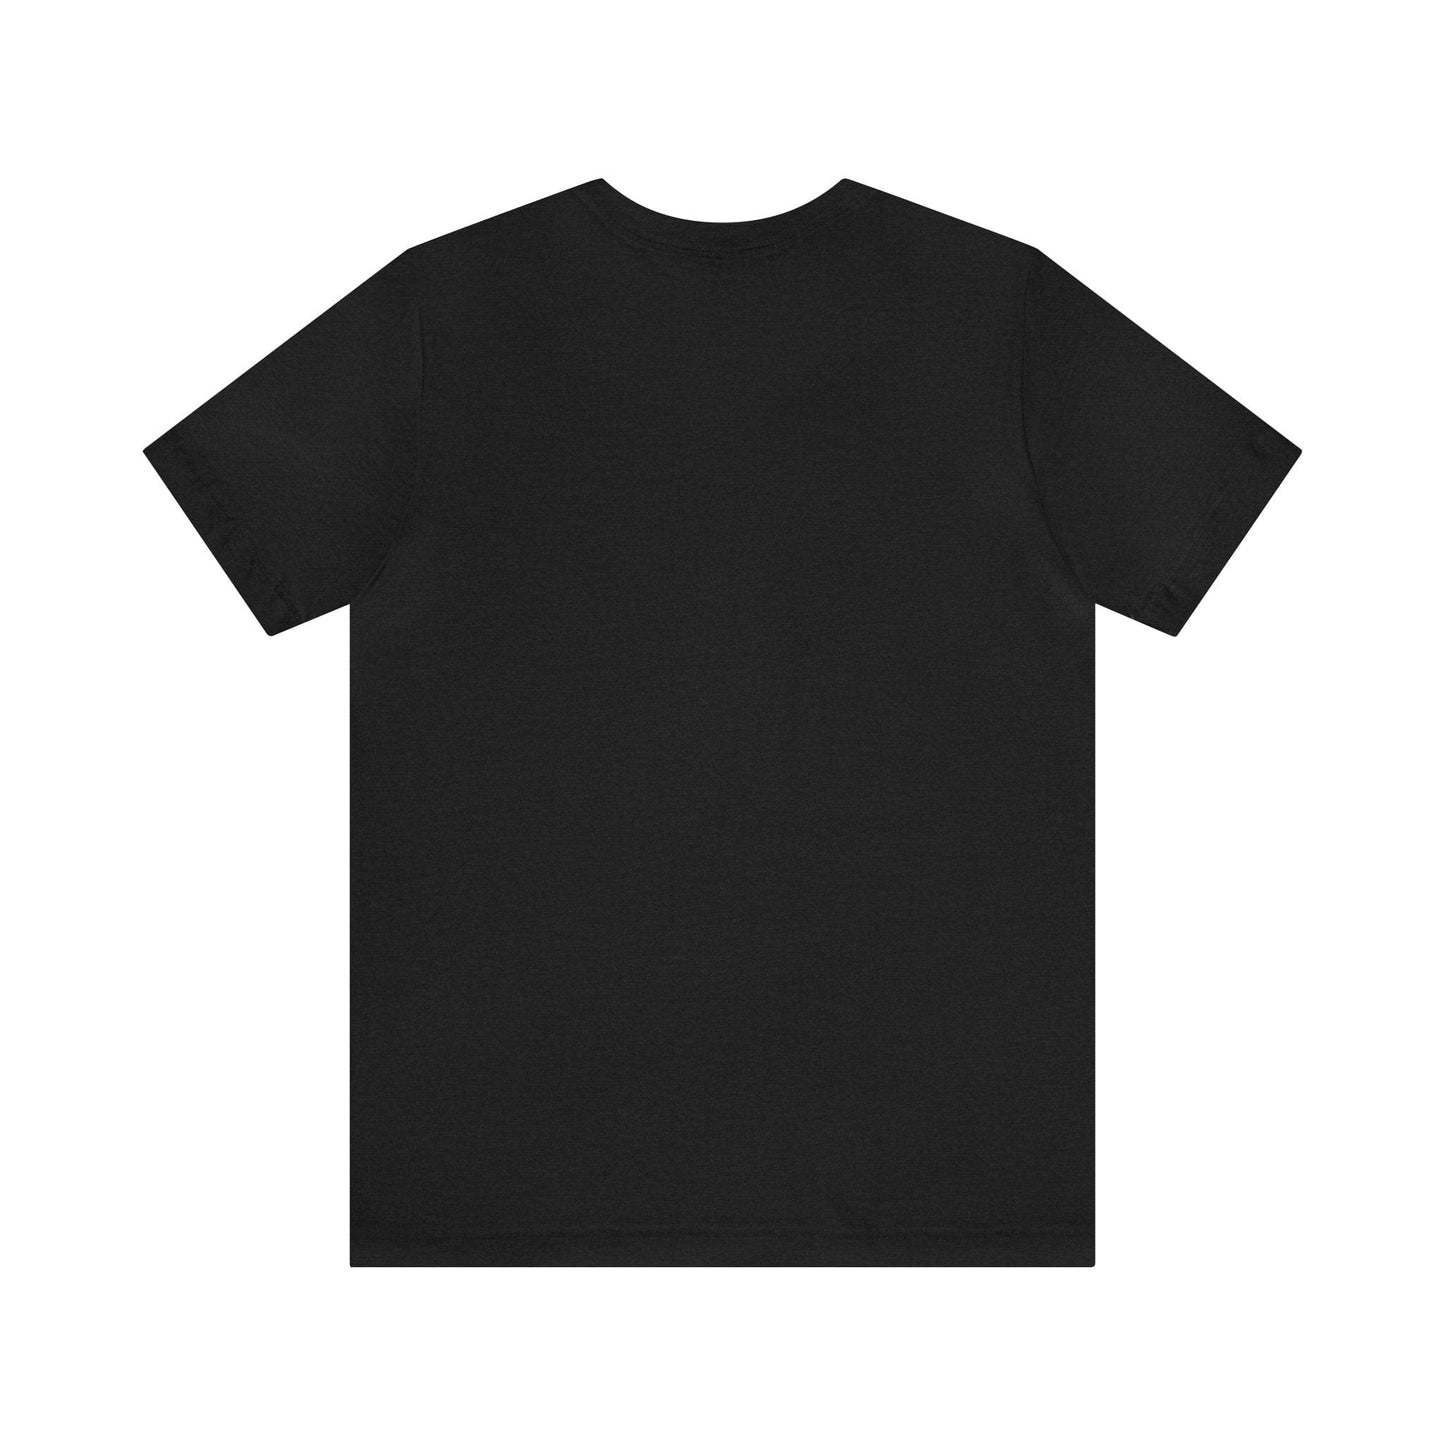 Yinzer Things Tee – Authentic Pittsburgh Slang T-Shirt | Yinzergear T-Shirt Printify 